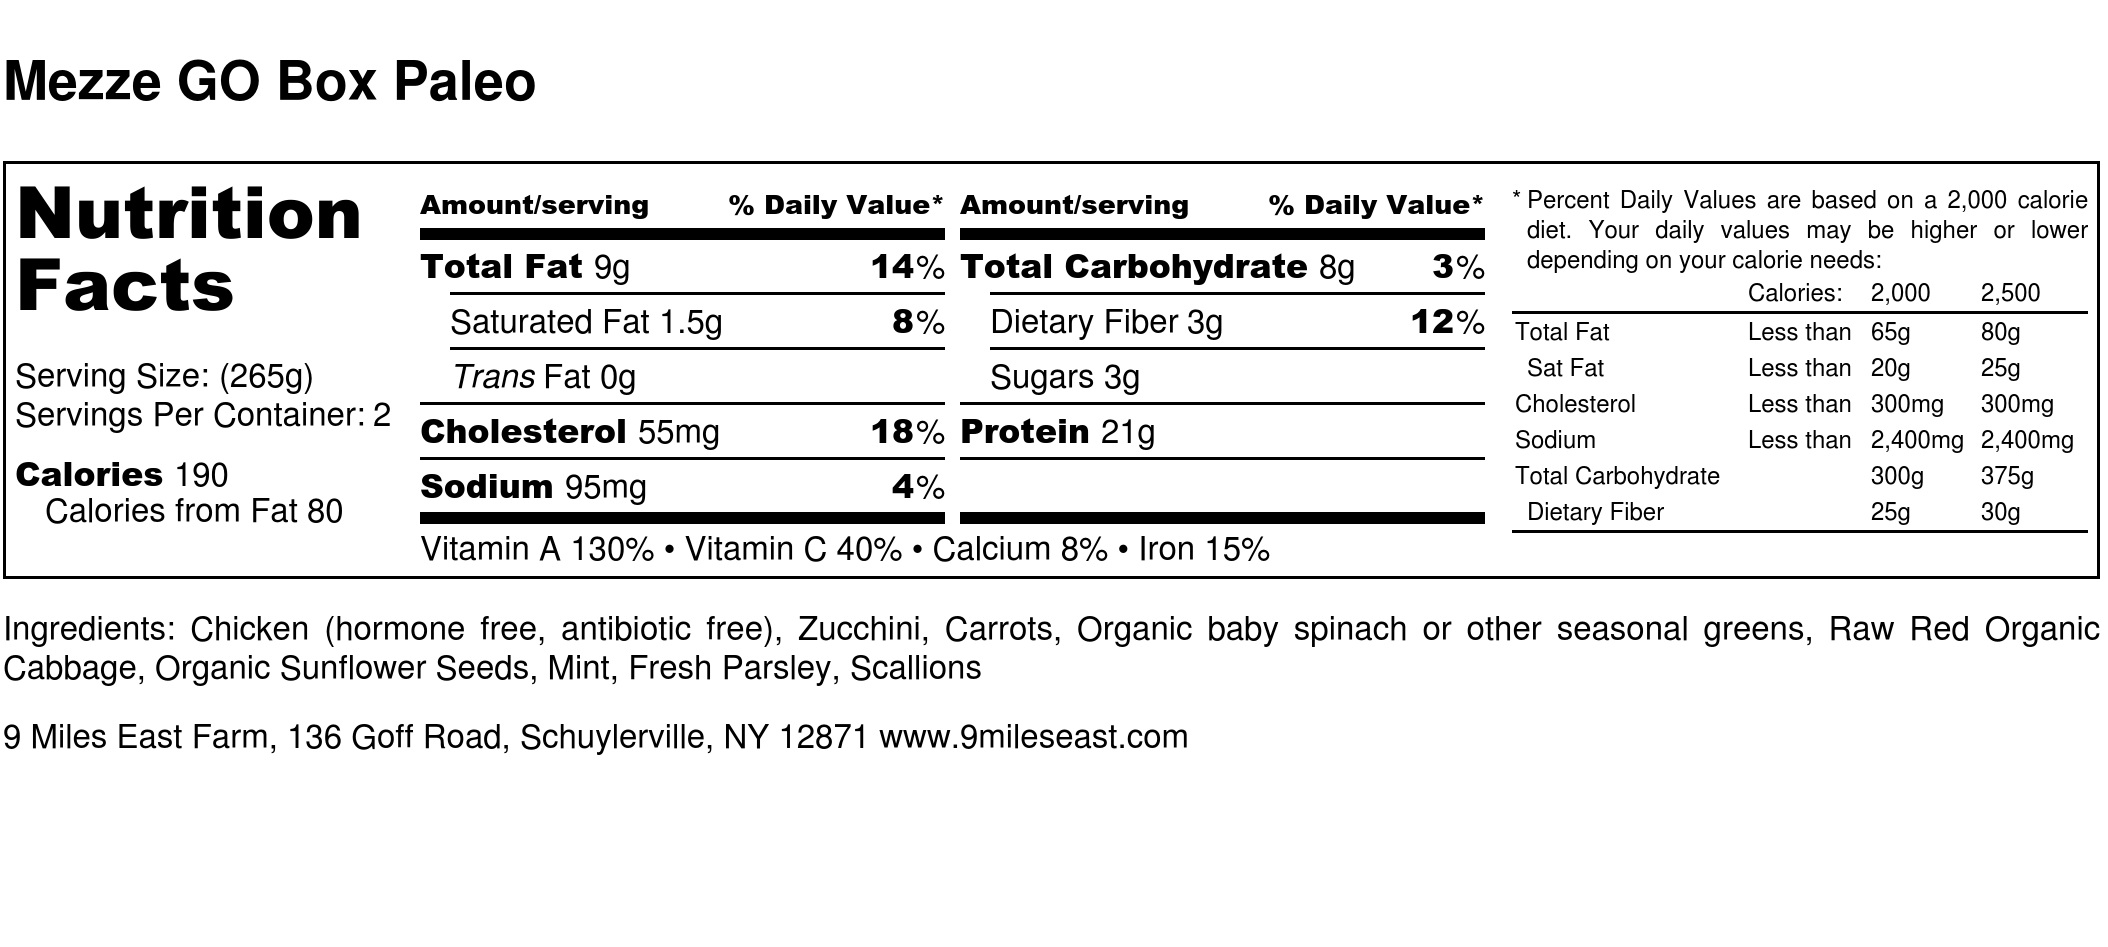 Mezze GO Box Paleo - Nutrition Label.jpg